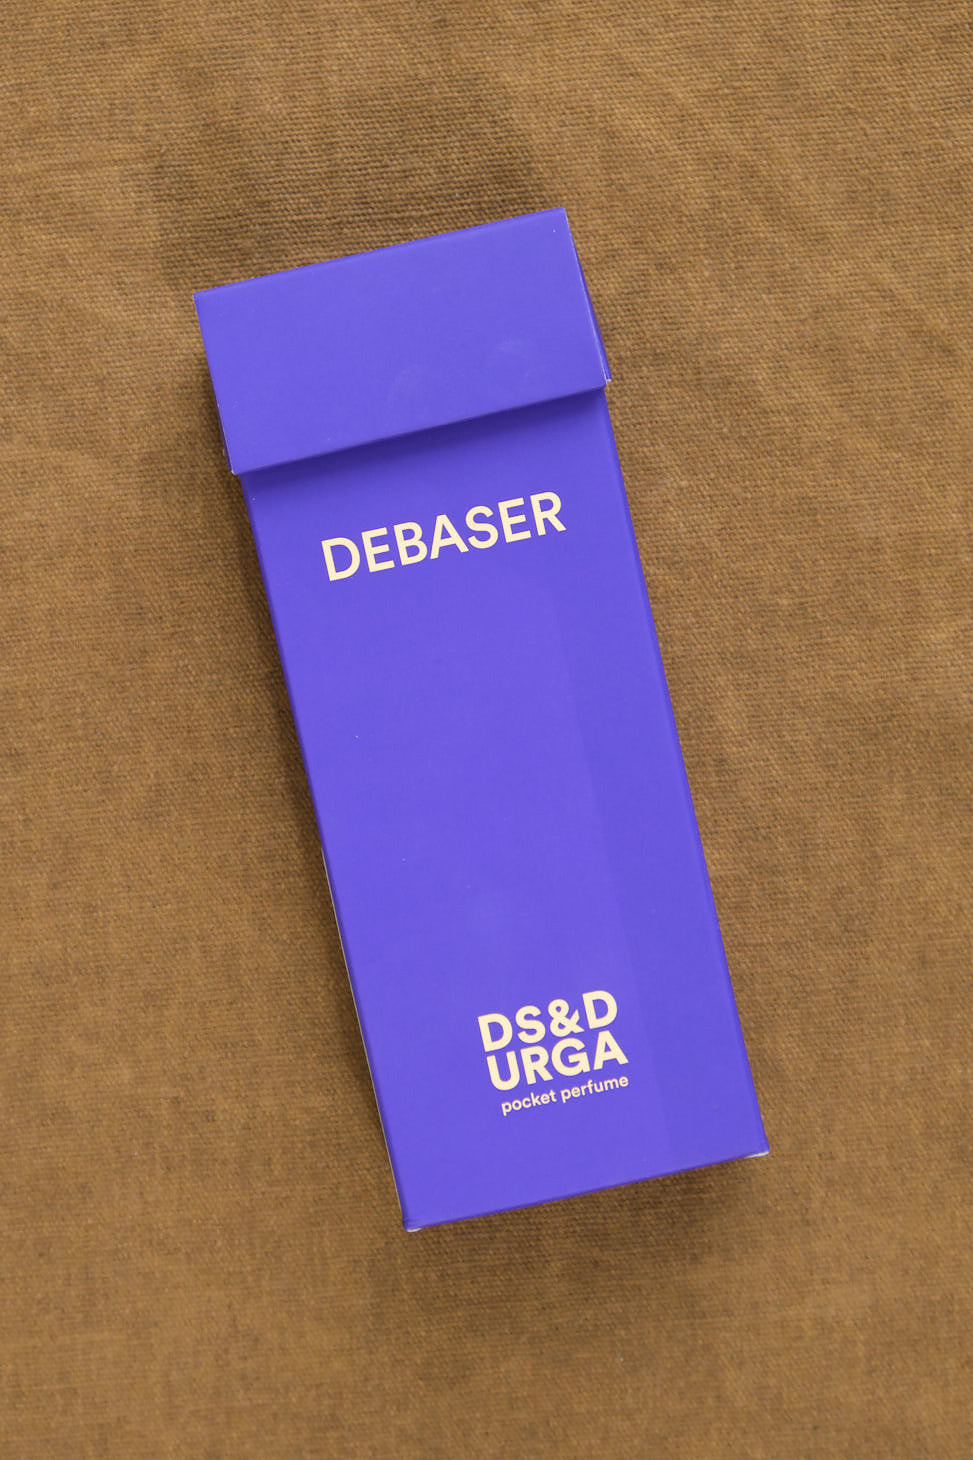 Box of Debaser Pocket Perfume